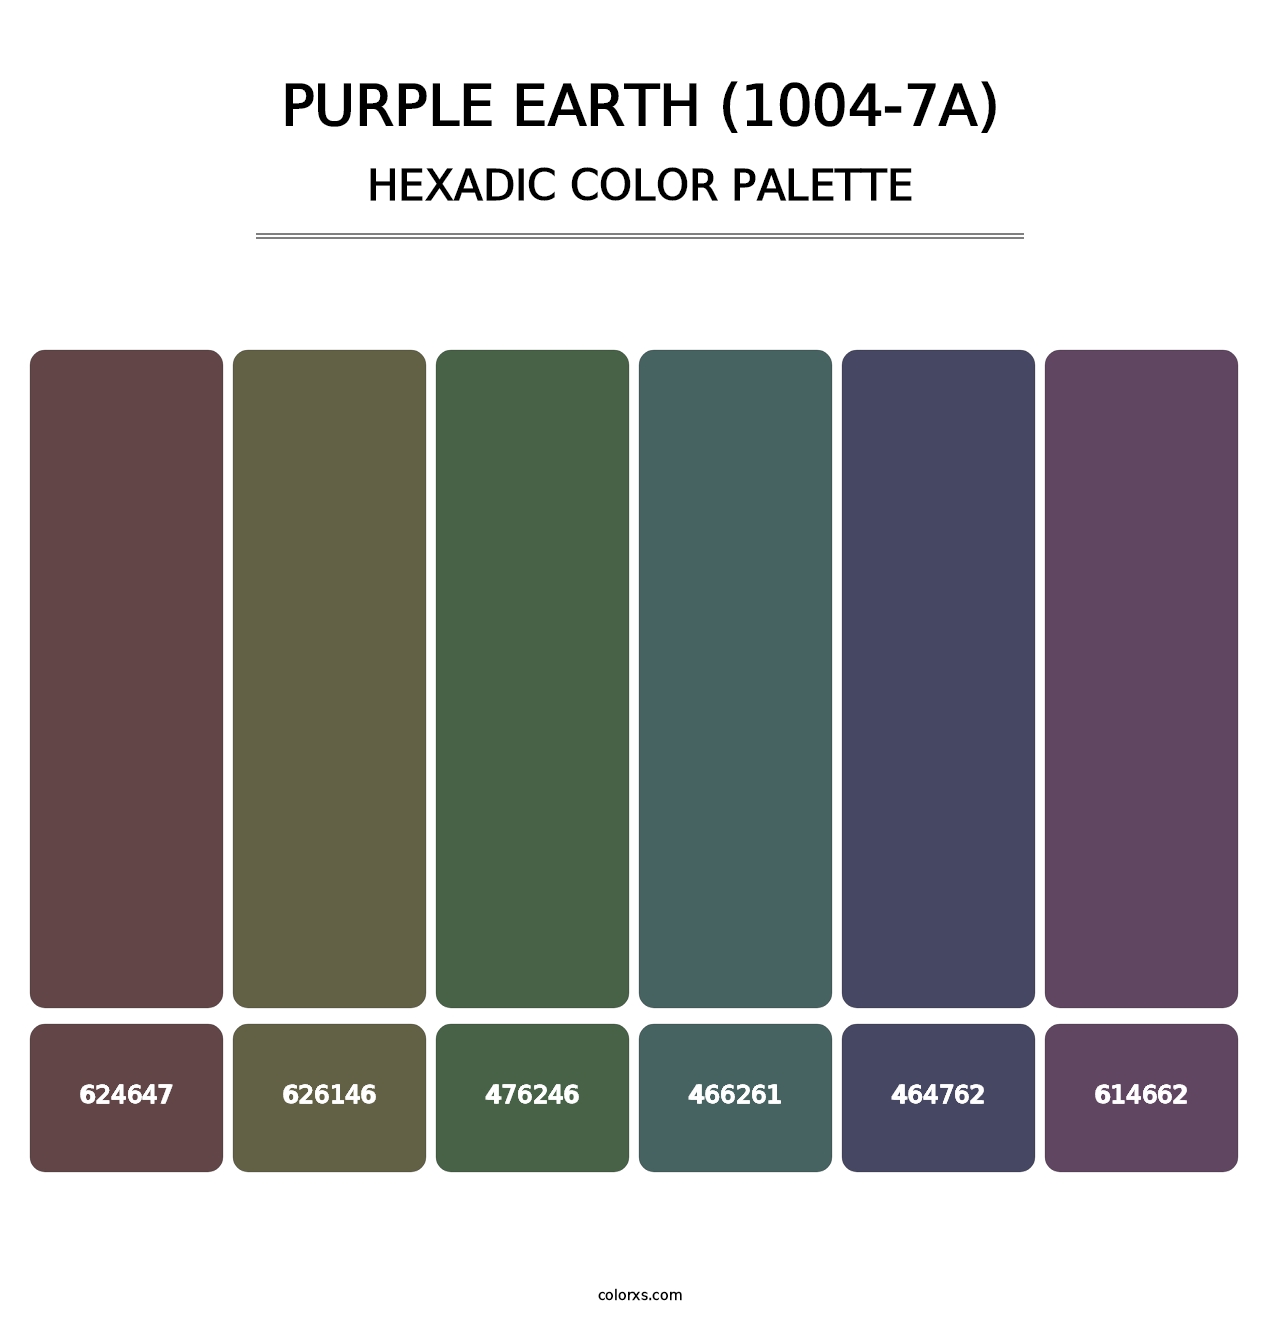 Purple Earth (1004-7A) - Hexadic Color Palette